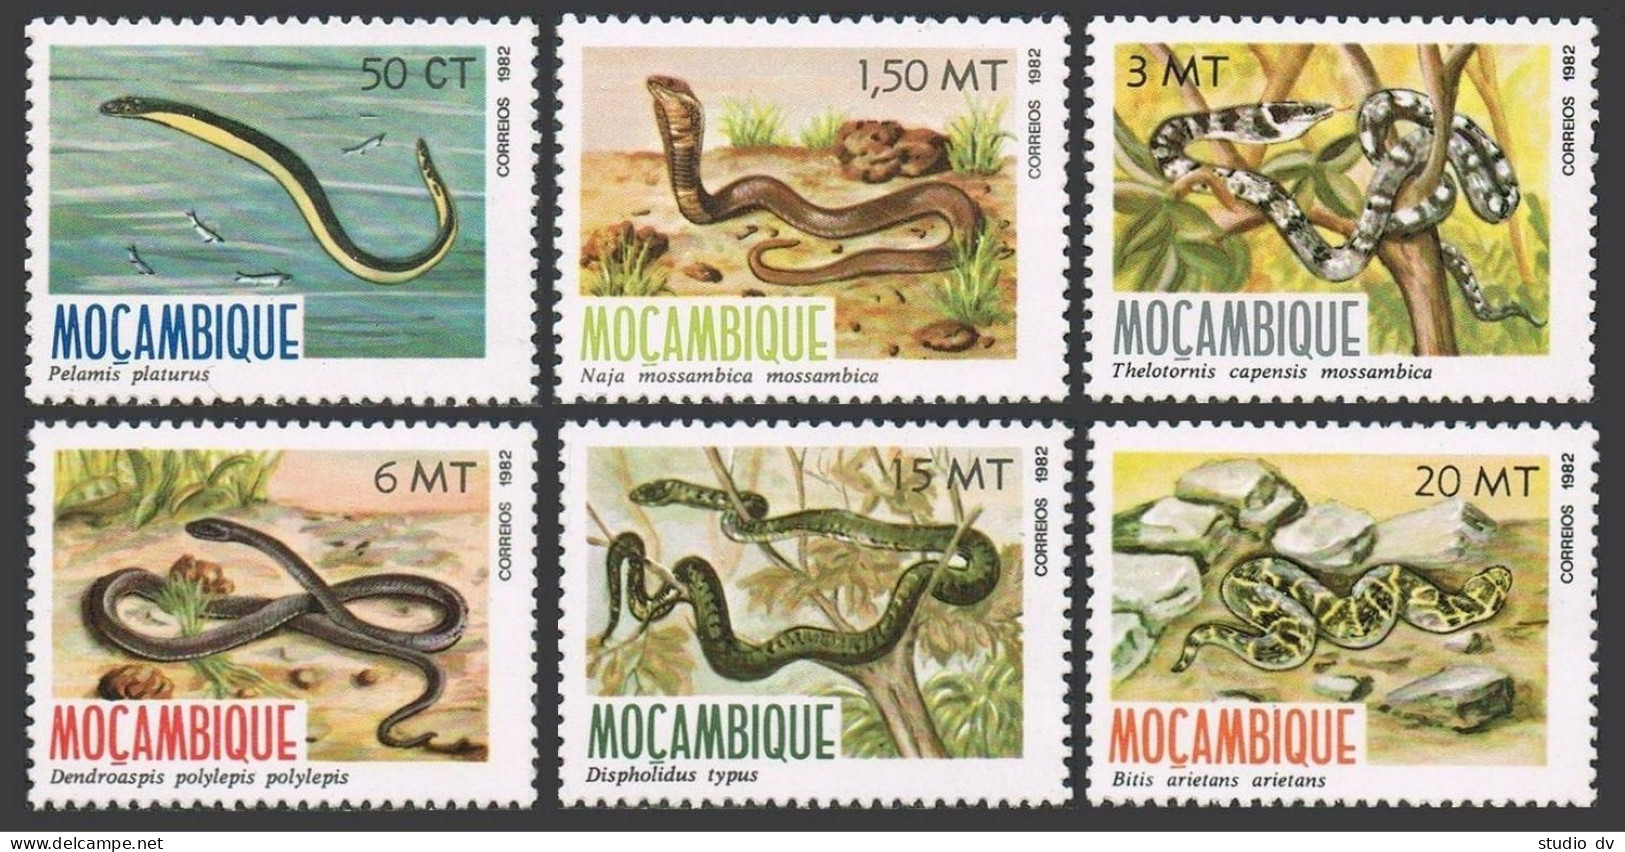 Mozambique 805-810,MNH.Michel 876-881. Snakes 1982.Sea,Cobra,Savana Vine, - Mozambique